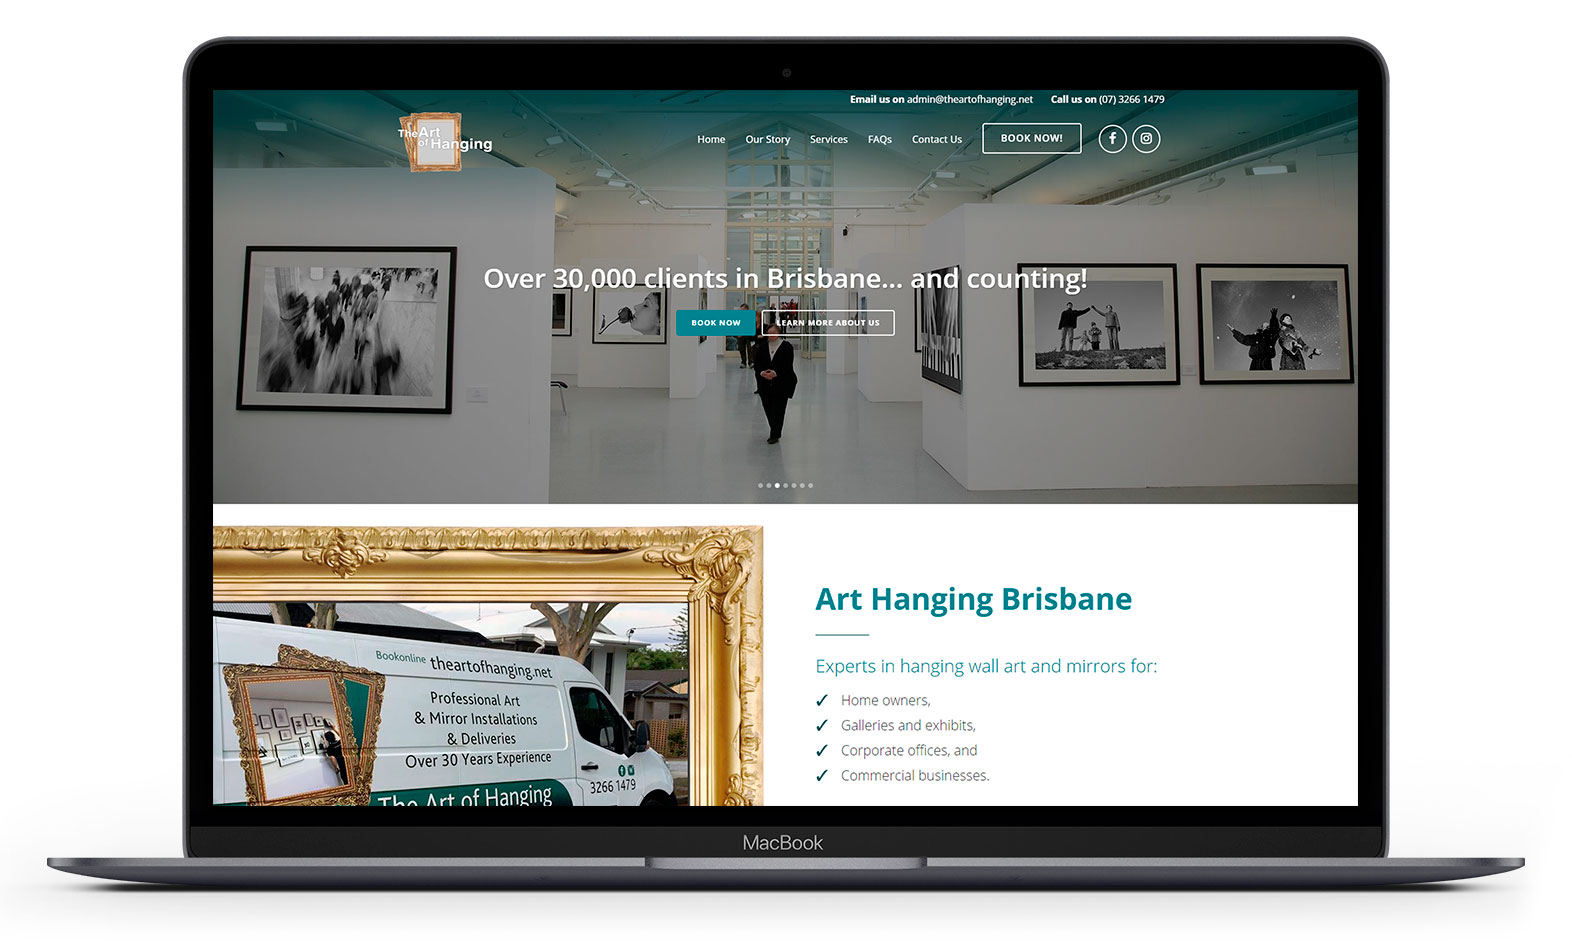 Art of hanging's website design displayed responsive devices